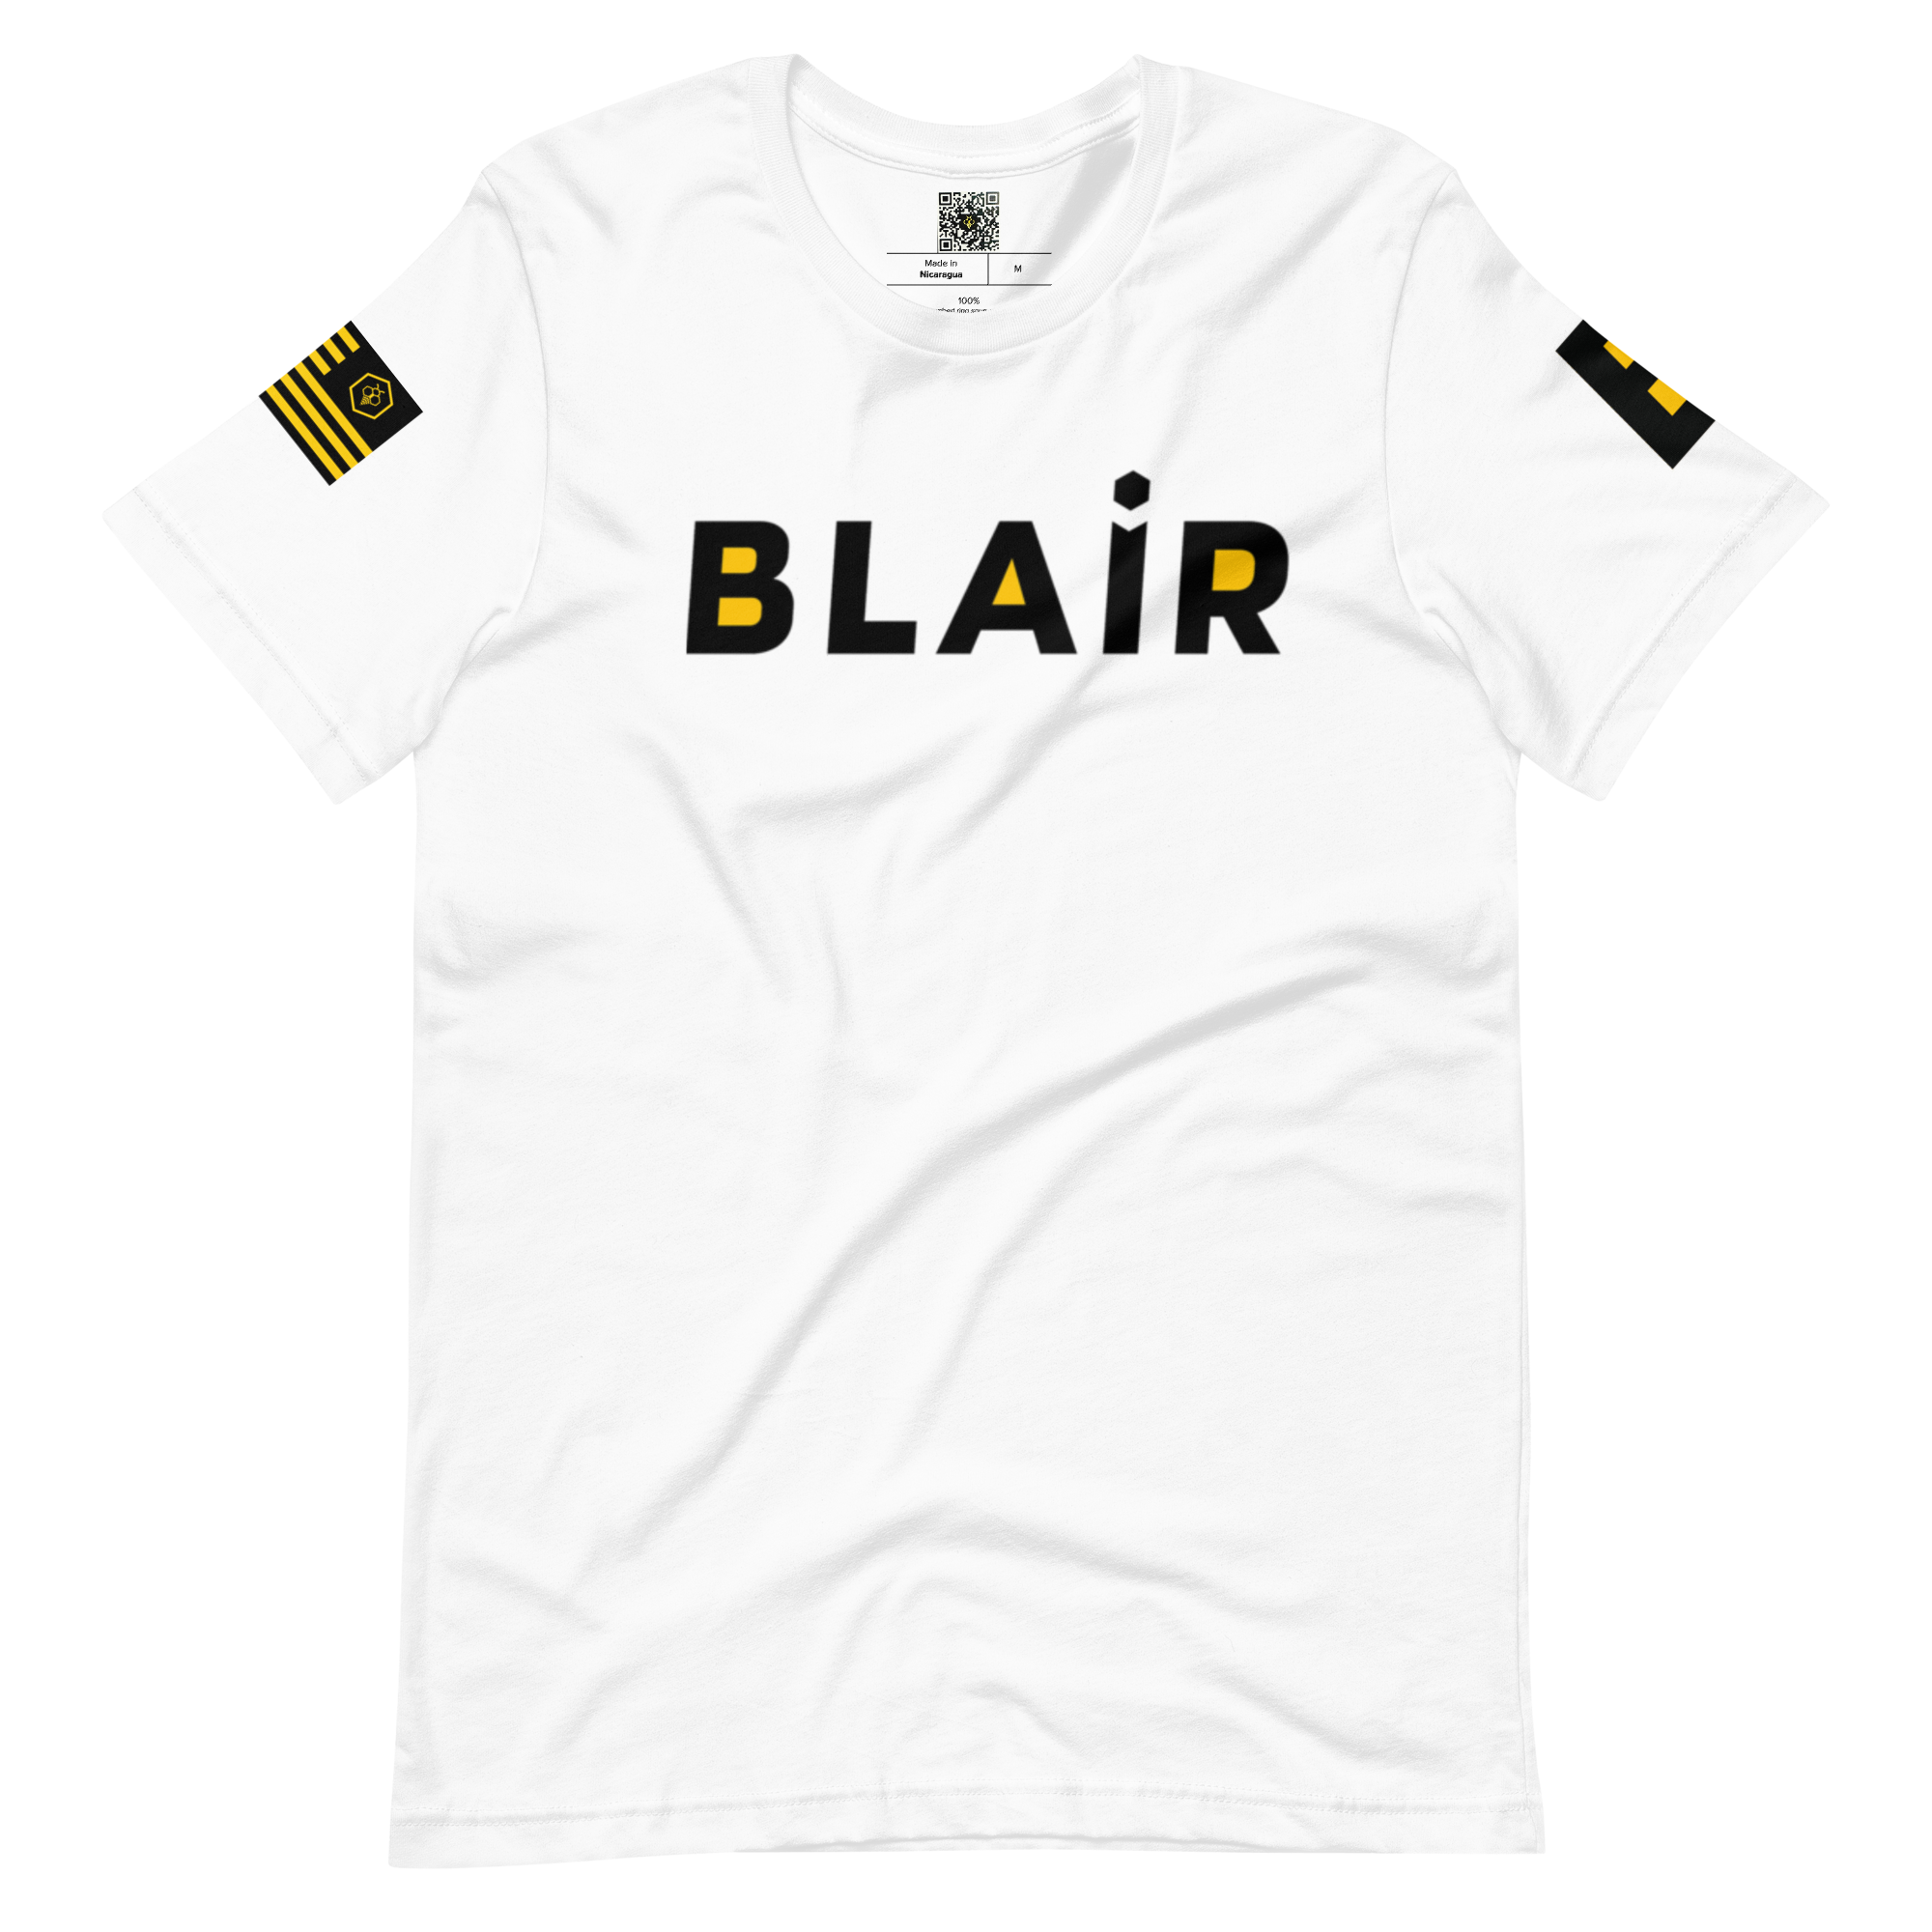 Blair T-shirt – BeLikeJBlair